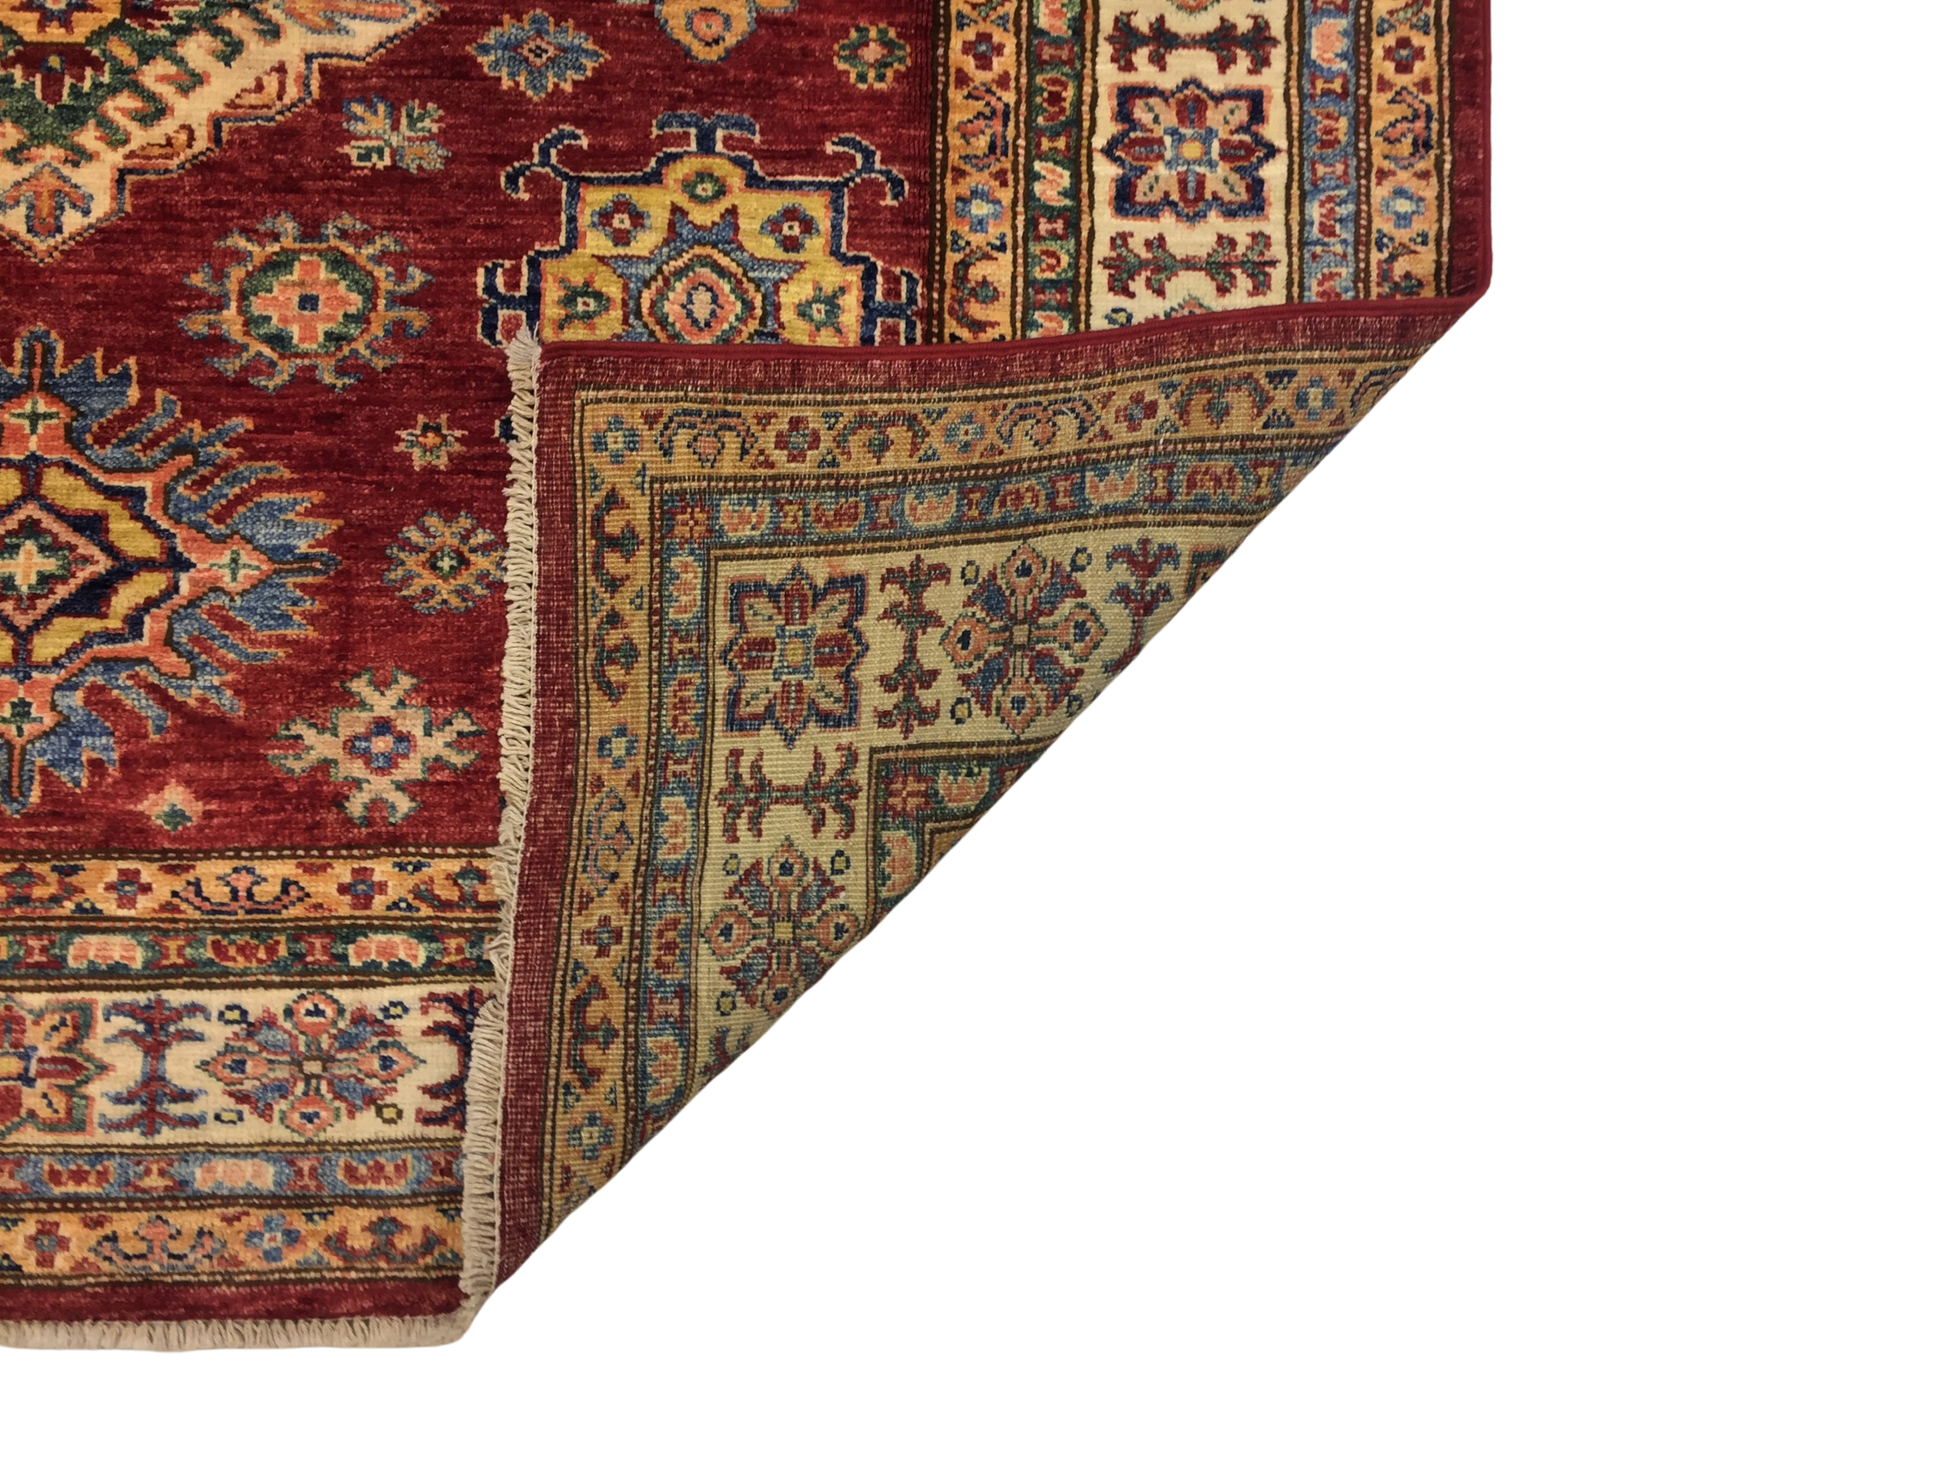 Şirvan Bicolor Carpet 197 X 150 cm - Alfombras de Estambul -  Turkish Carpets - Alfombras de Estambul